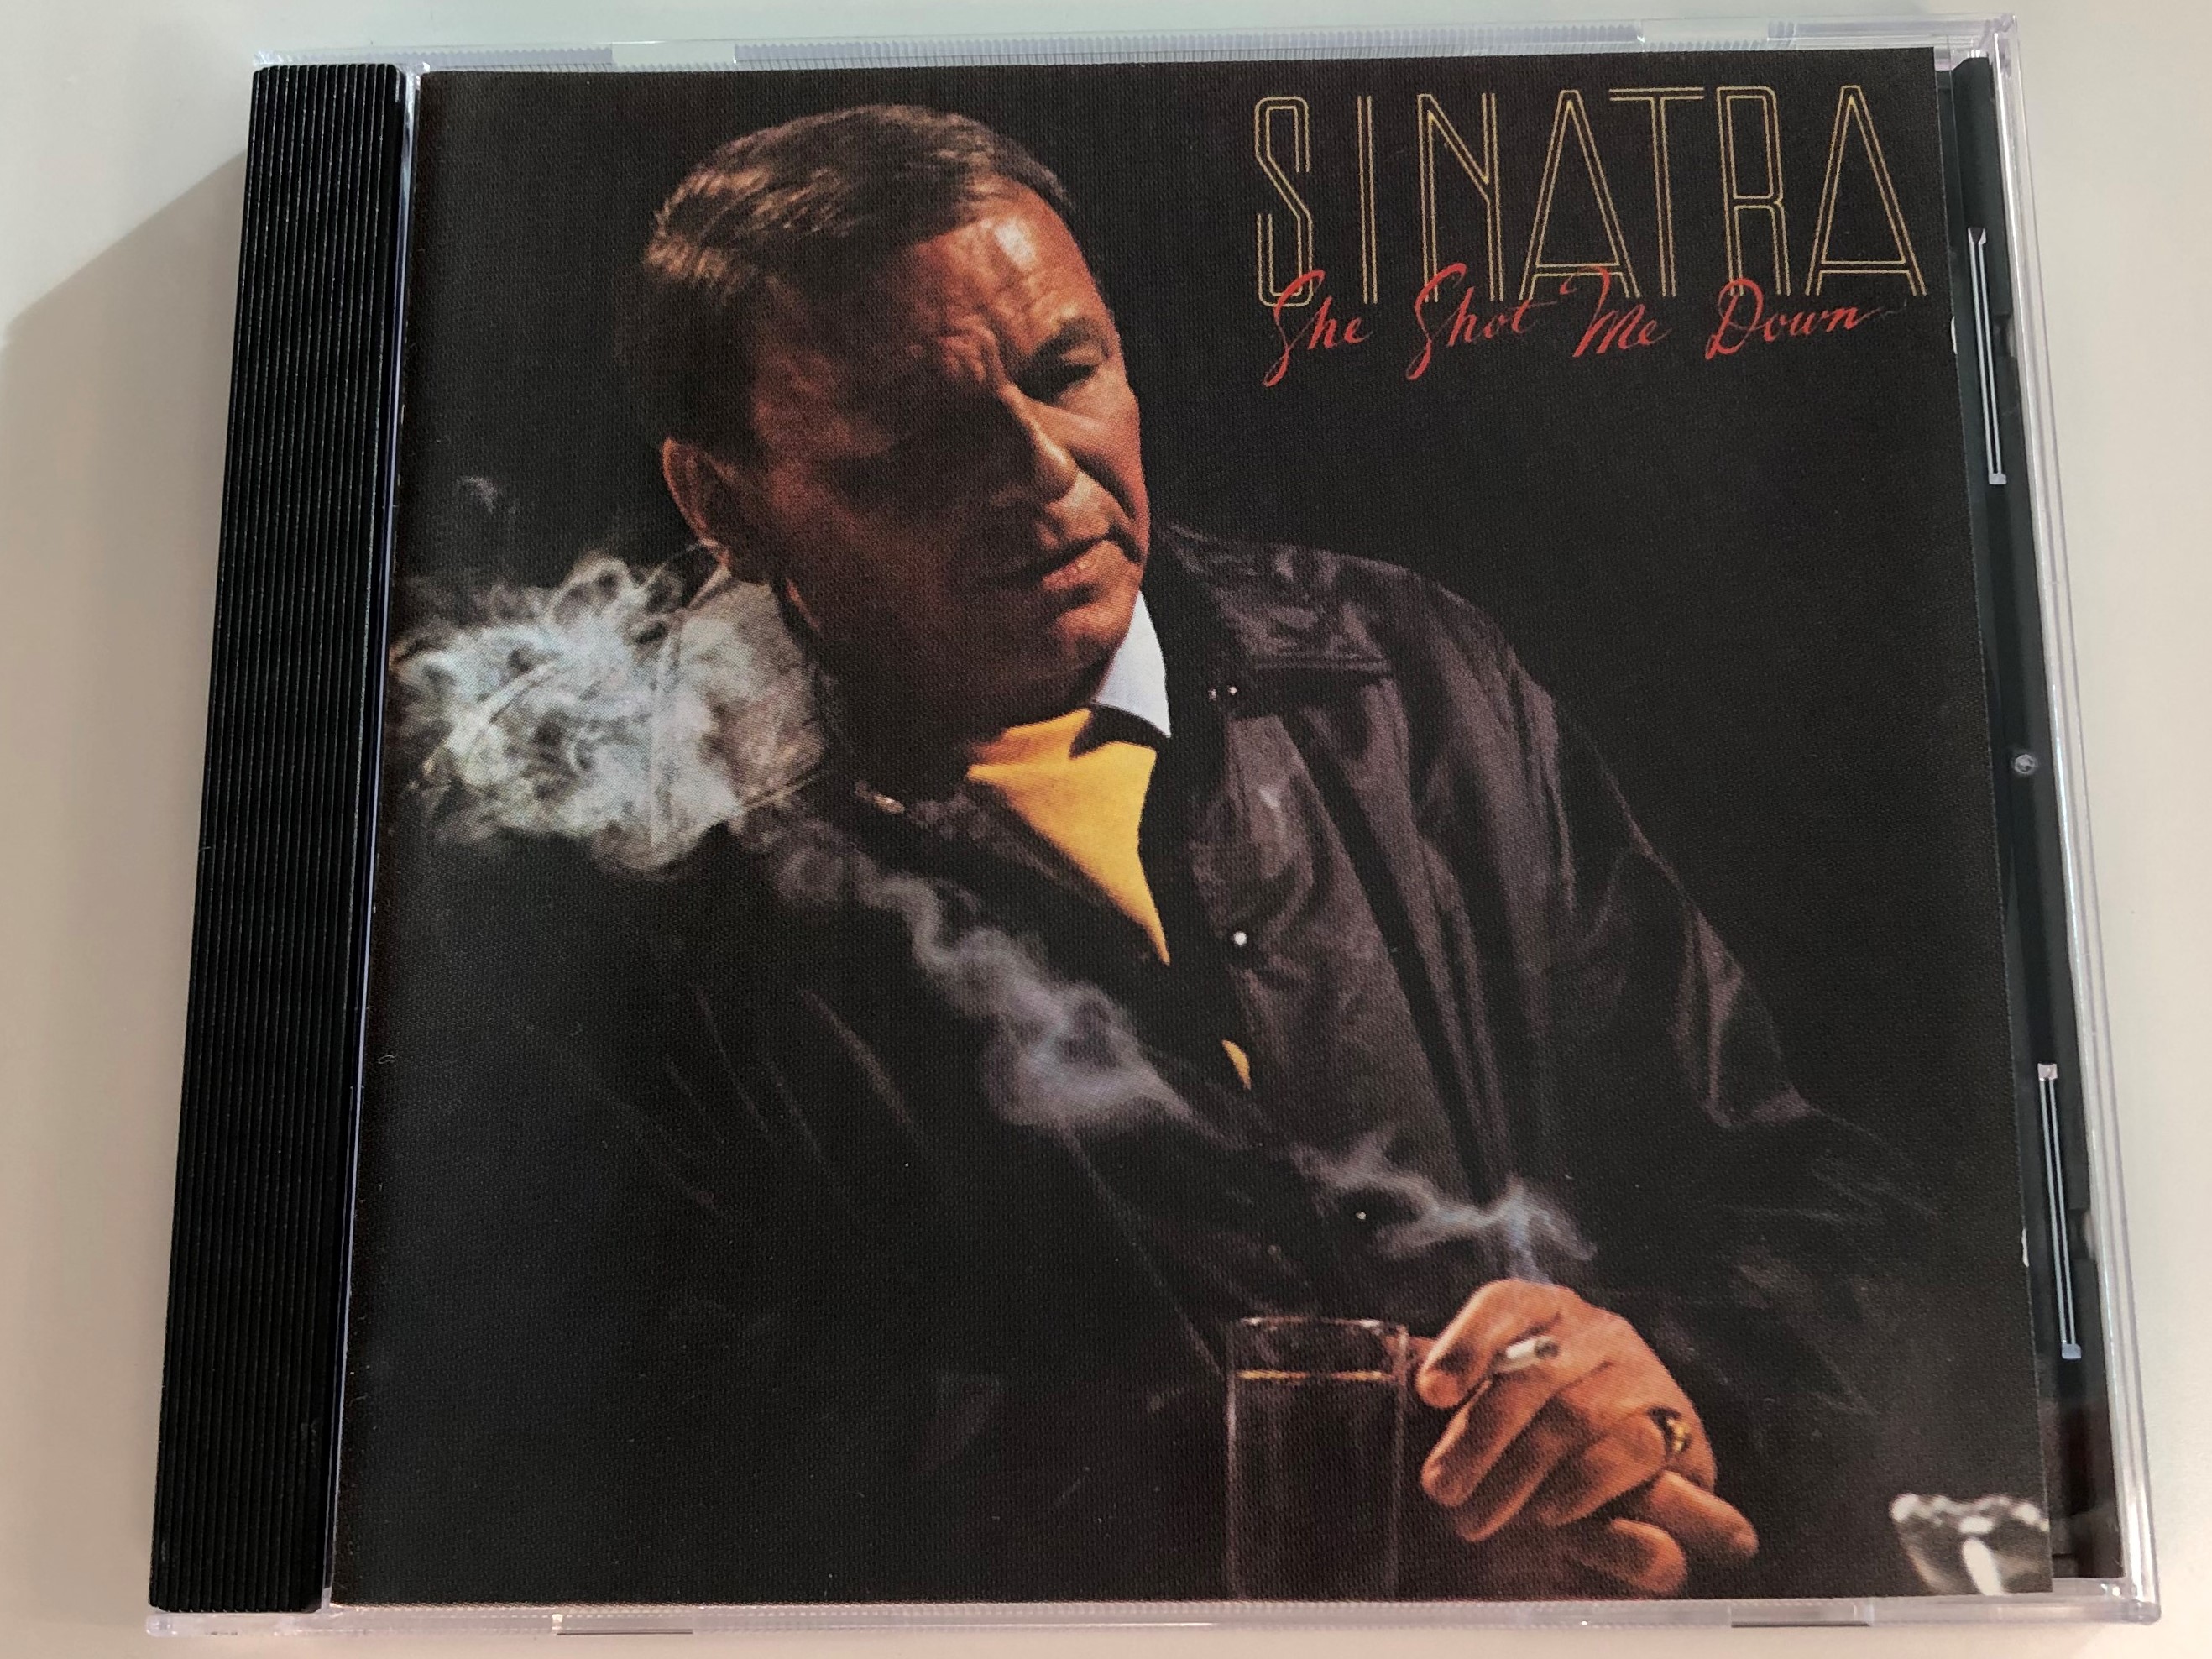 sinatra-she-shot-me-down-reprise-records-audio-cd-7599-27251-2-1-.jpg